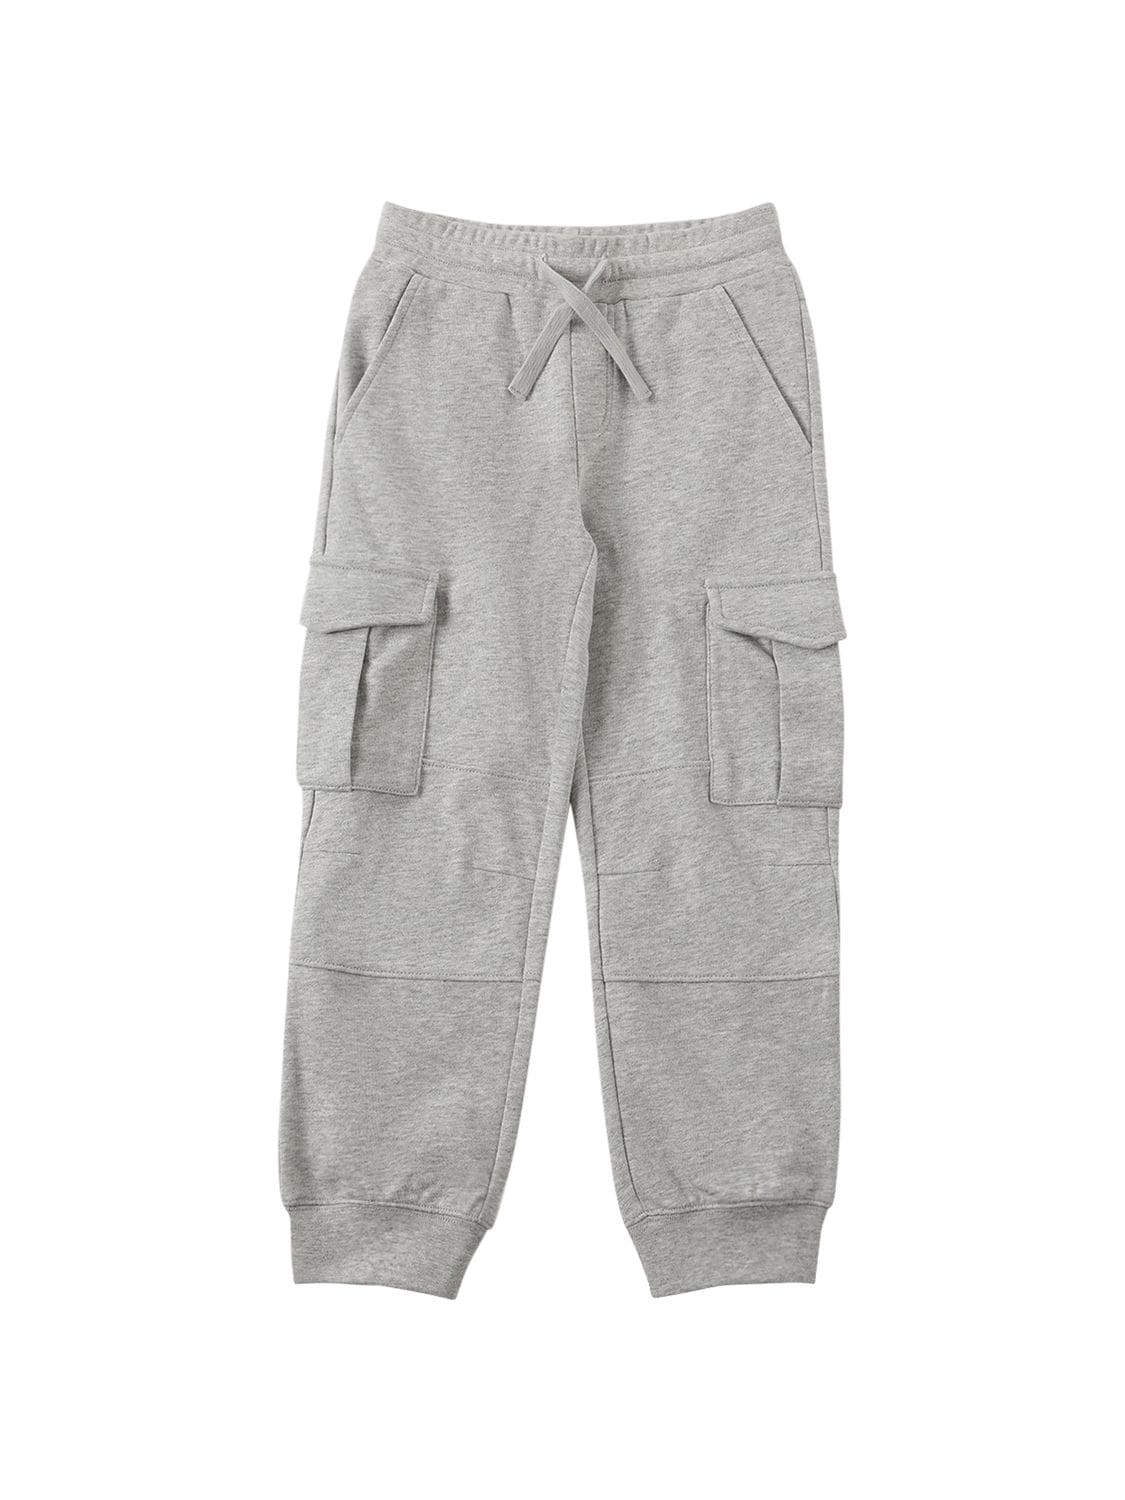 Grey Jogger Pants With Pockets